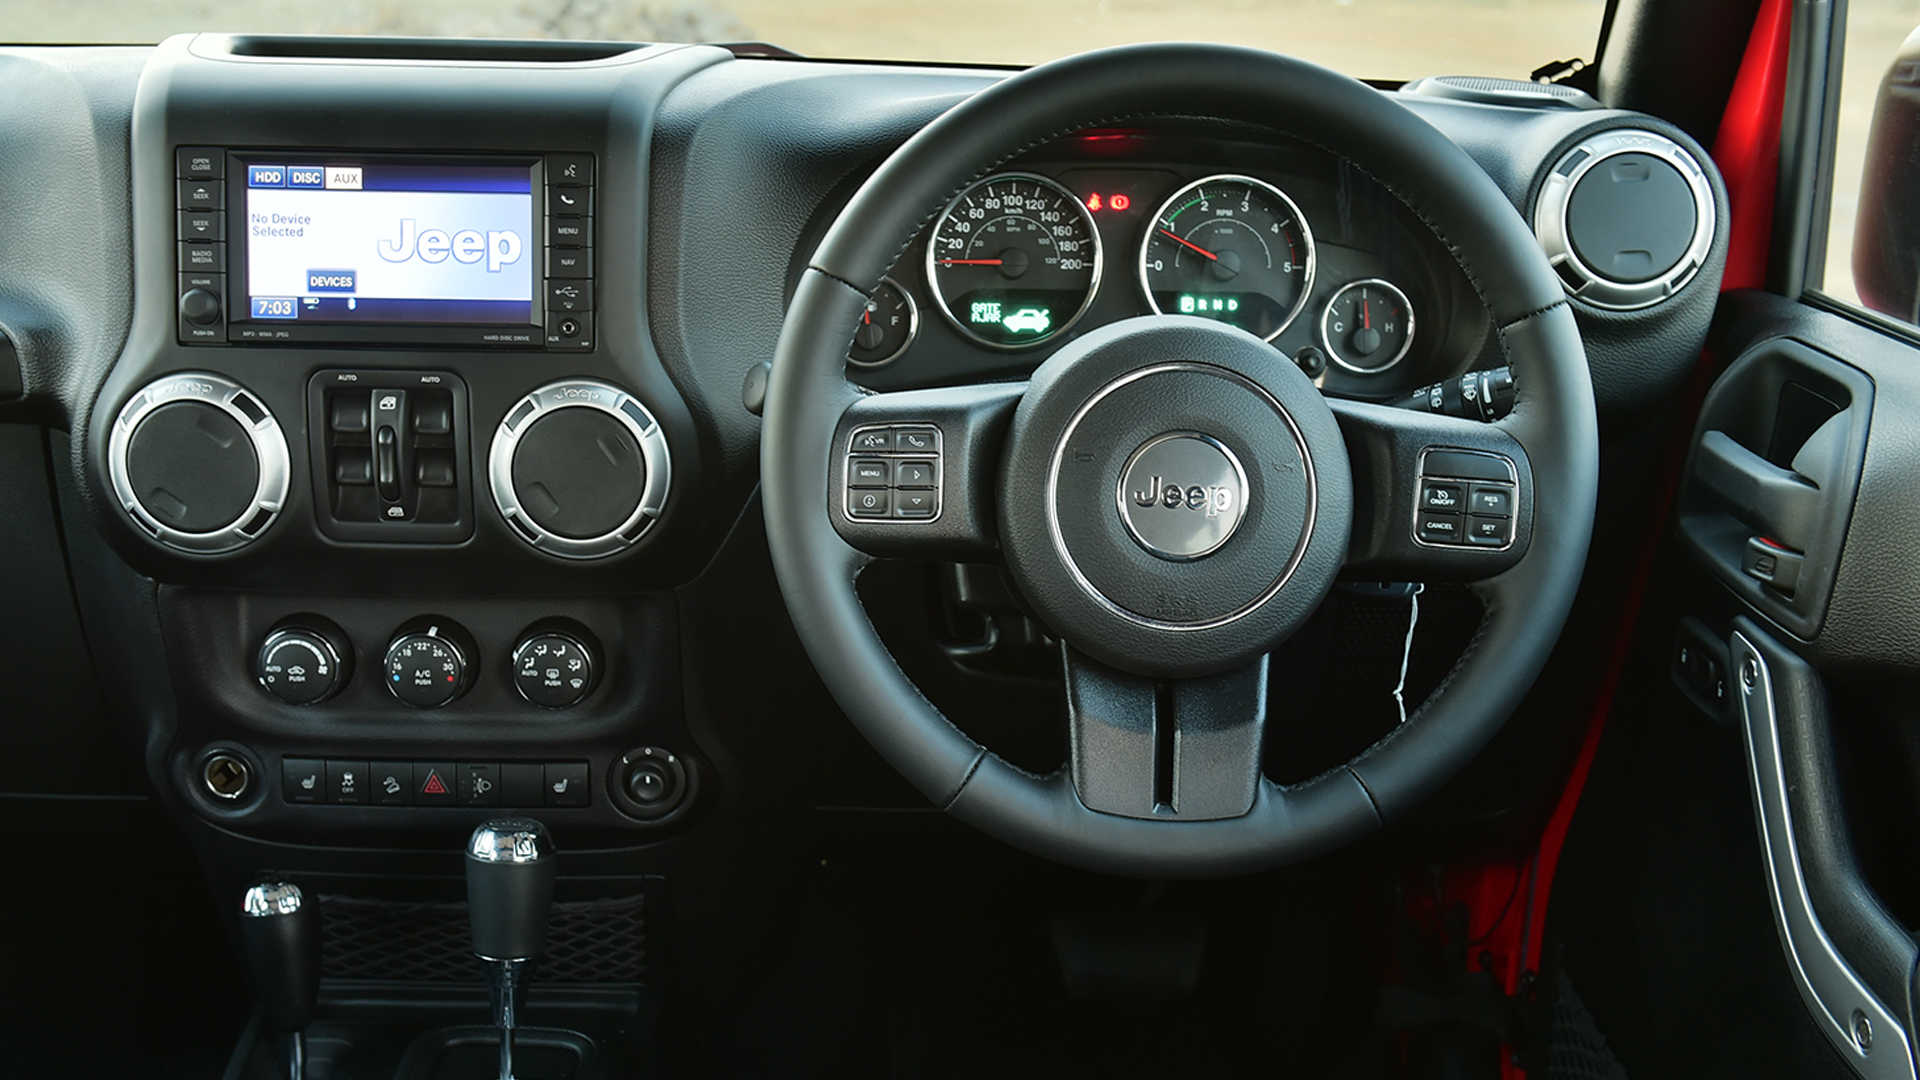 Jeep Wrangler 2016 Unlimited Interior